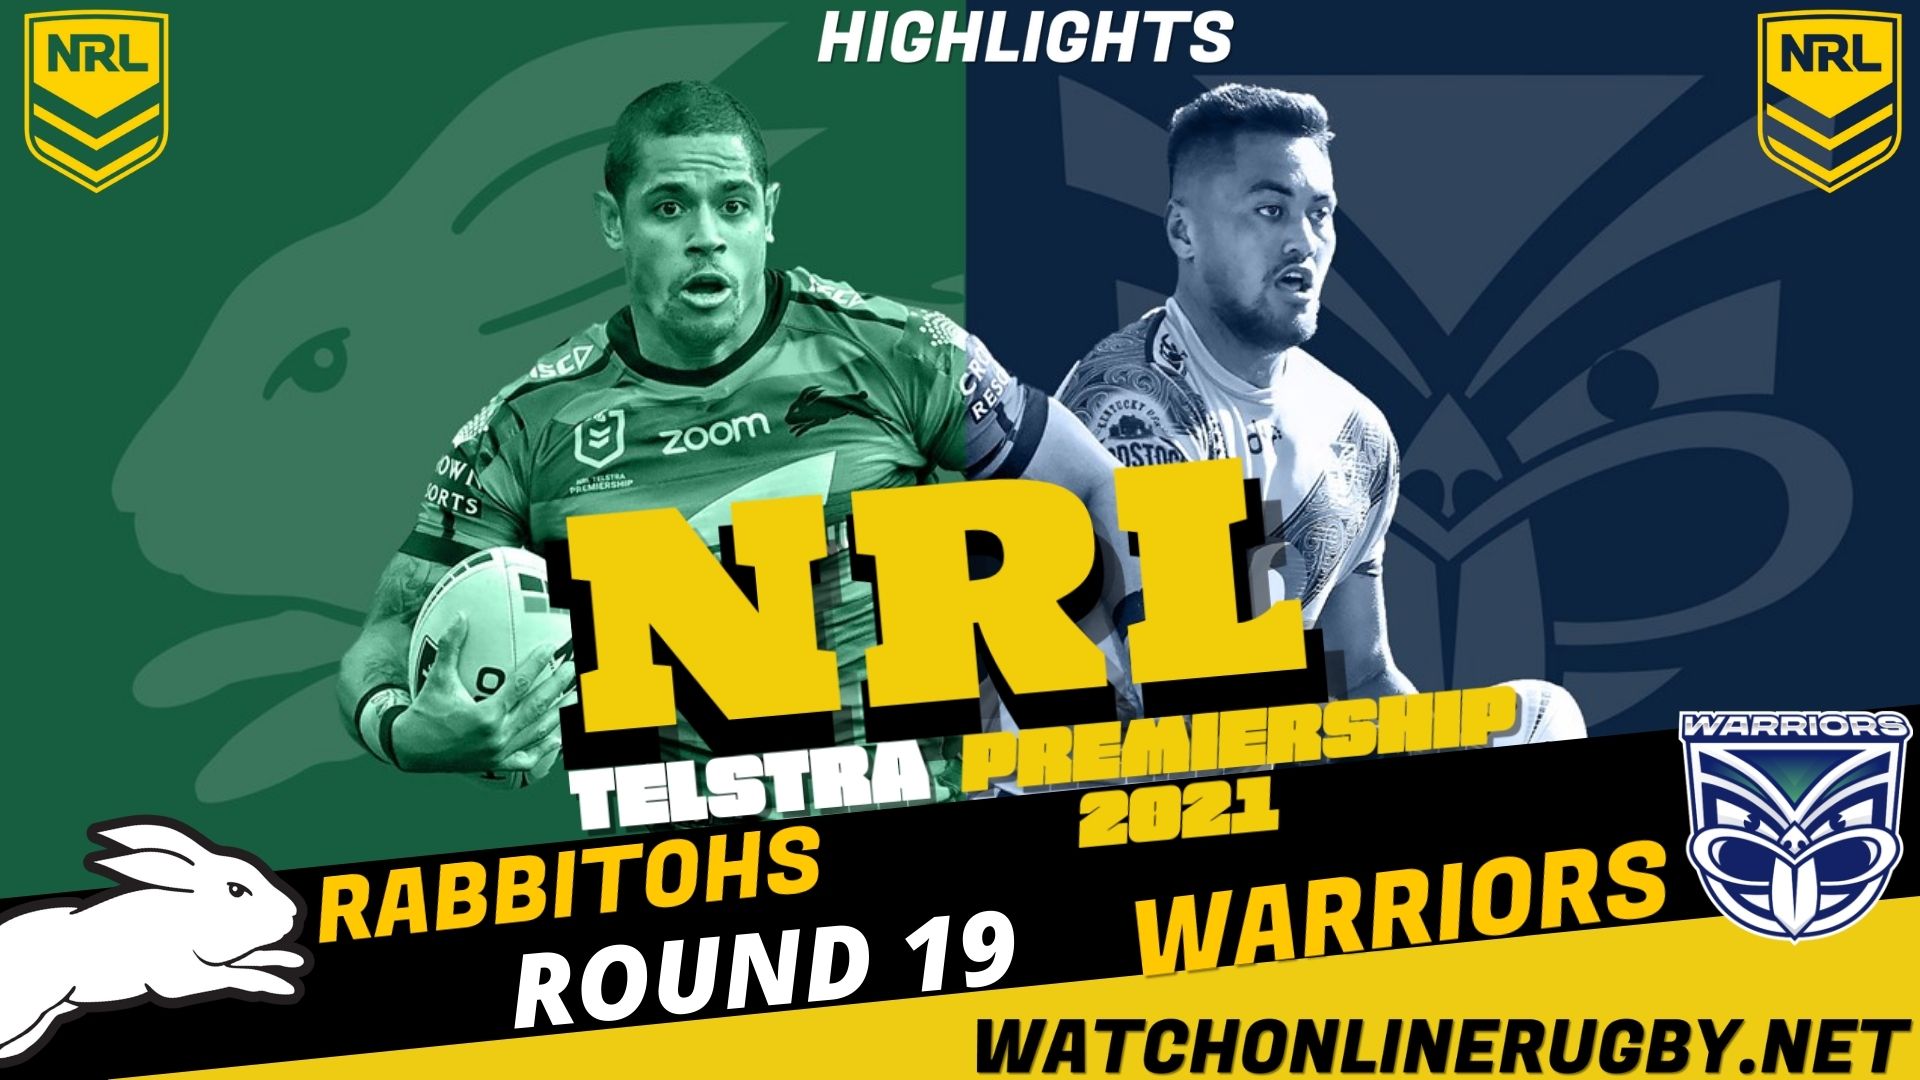 Rabbitohs Vs Warriors Highlights RD 19 NRL Rugby